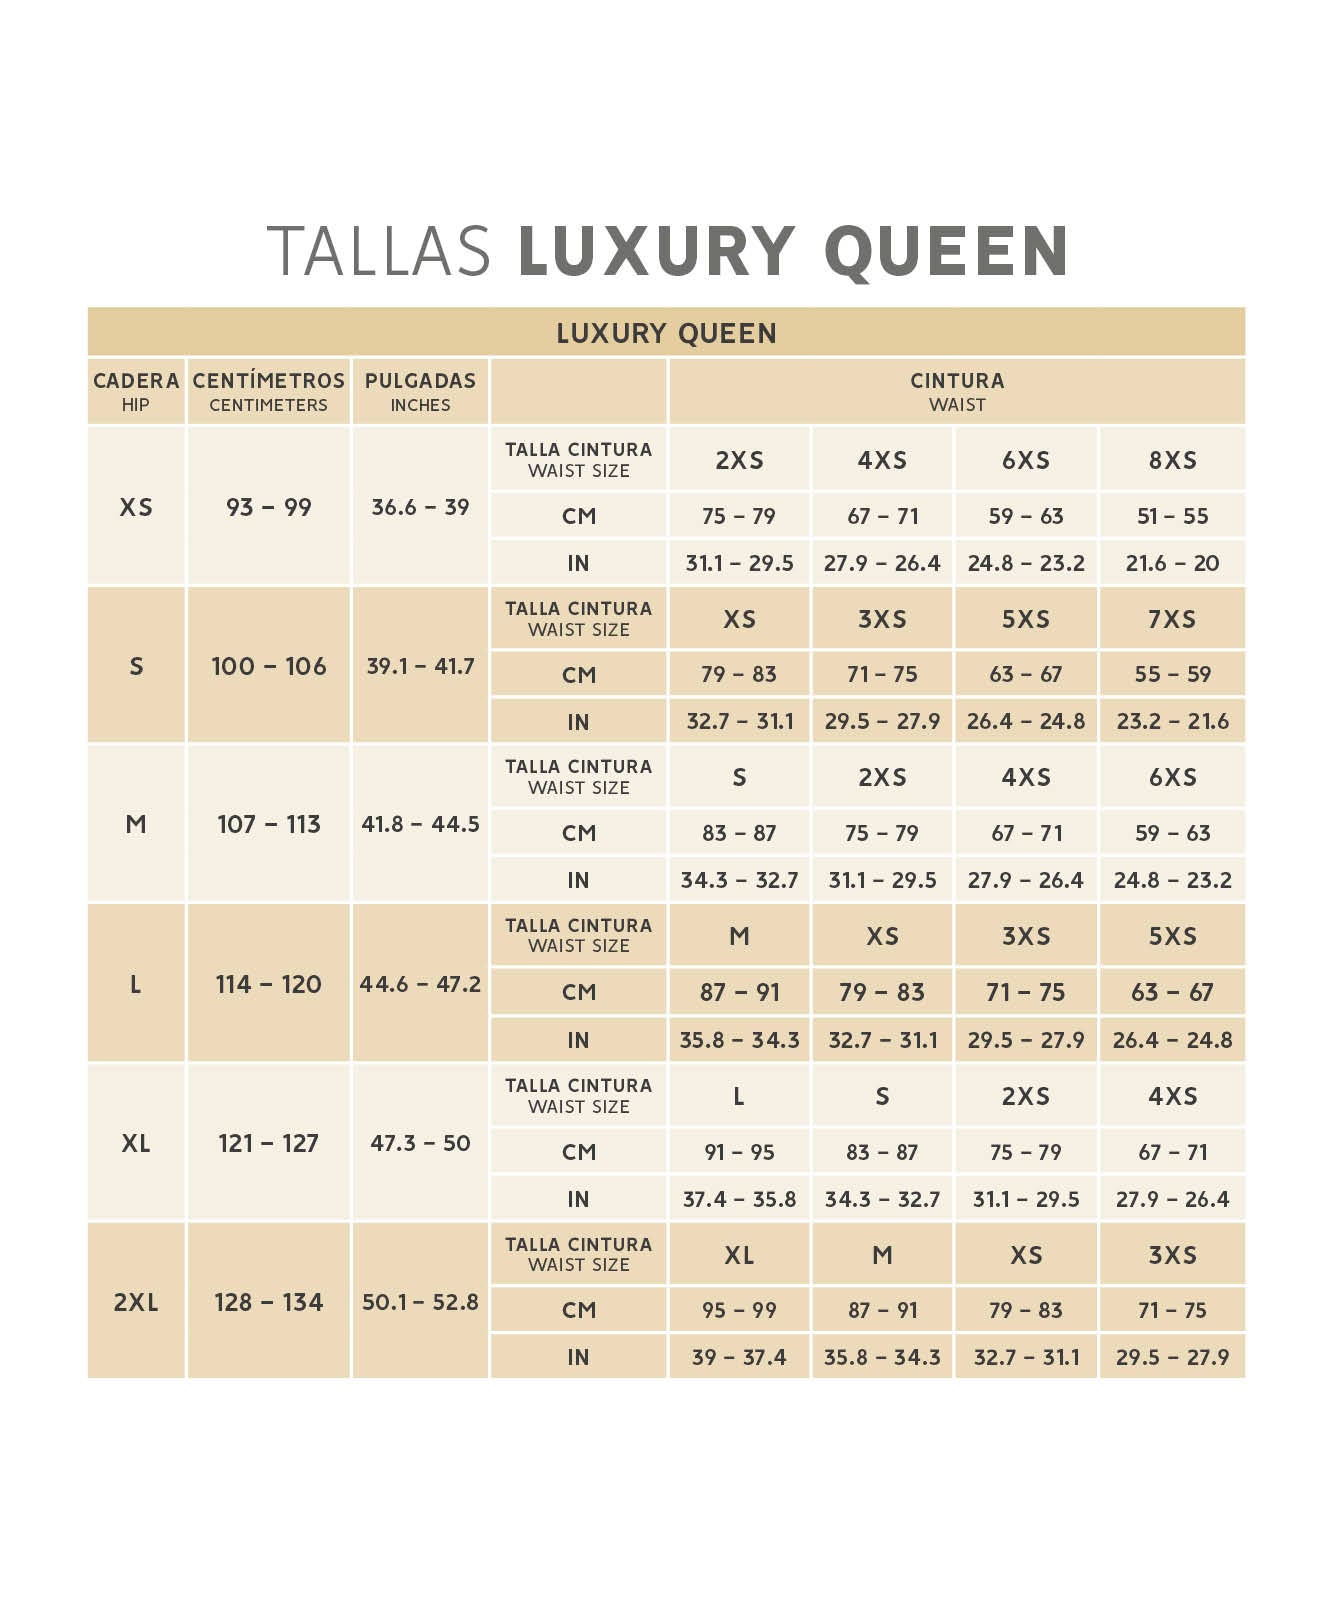 Tallas luxury queen